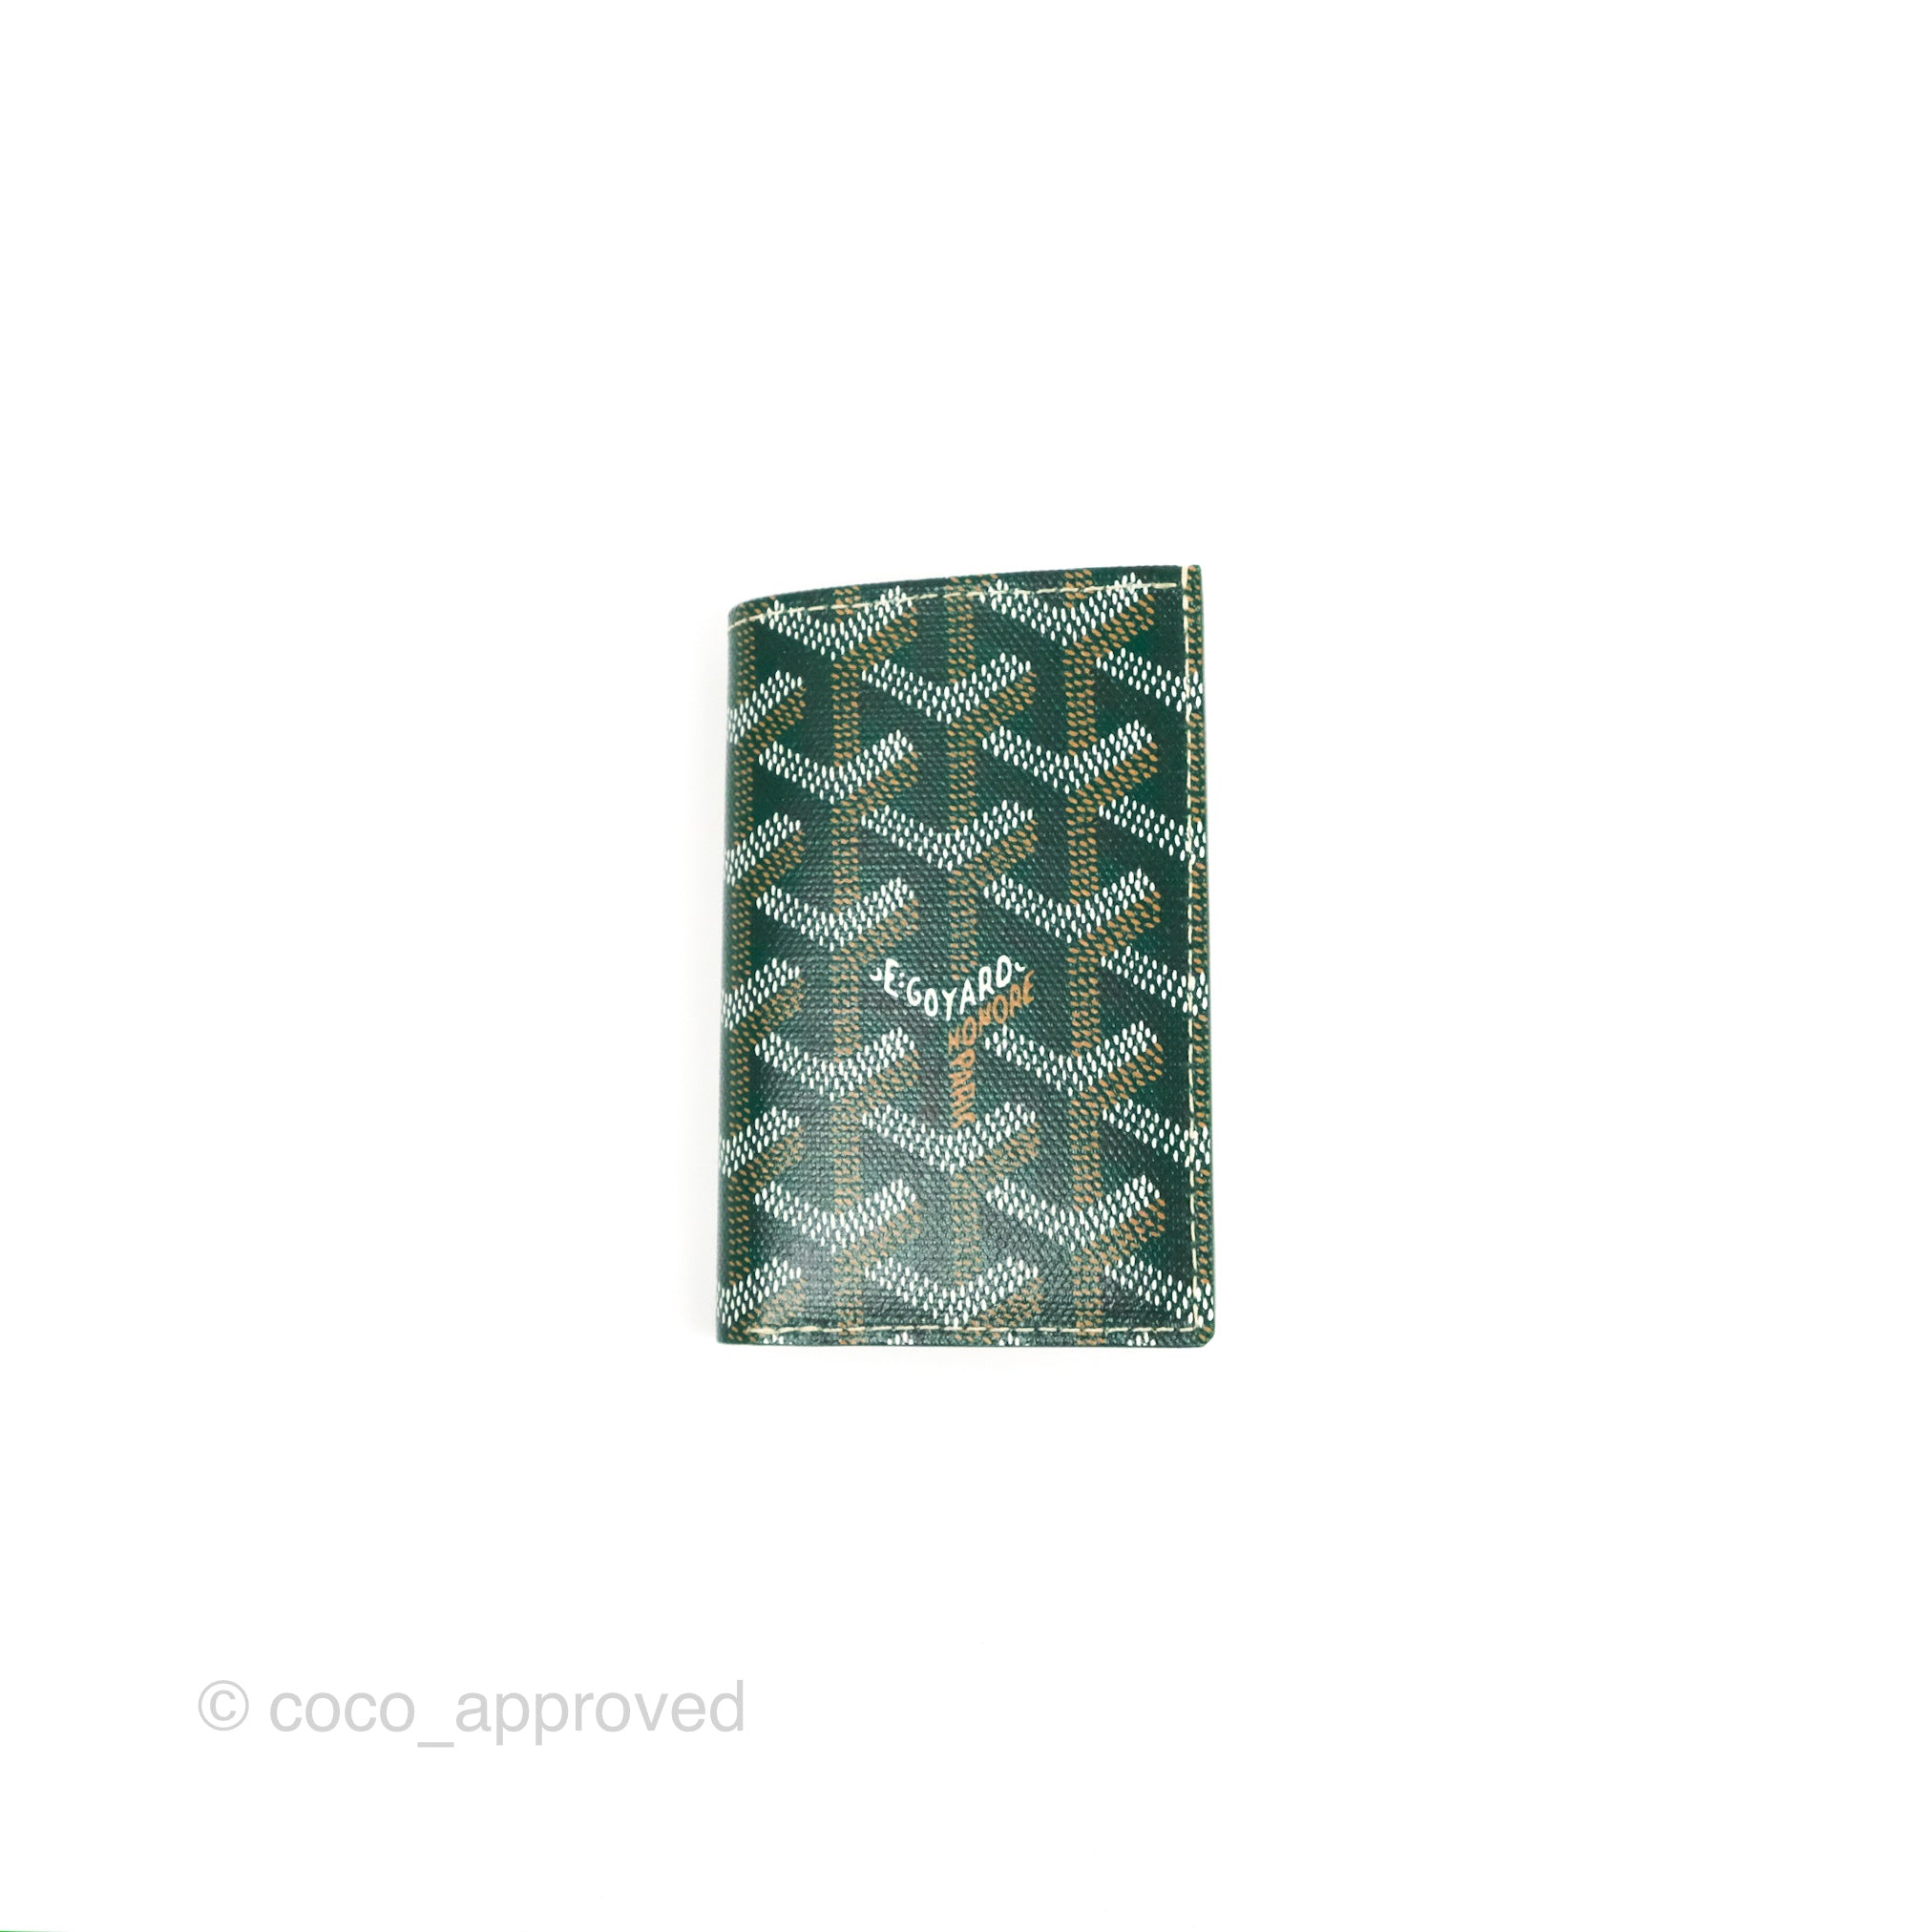 Aripuu on X: Goyard Saint-Pierre Card Wallet Colors: Grey / Green(Vert)  ใบละ 27,000 บาท งับ dm ถามได้เล่ยๆๆ  / X